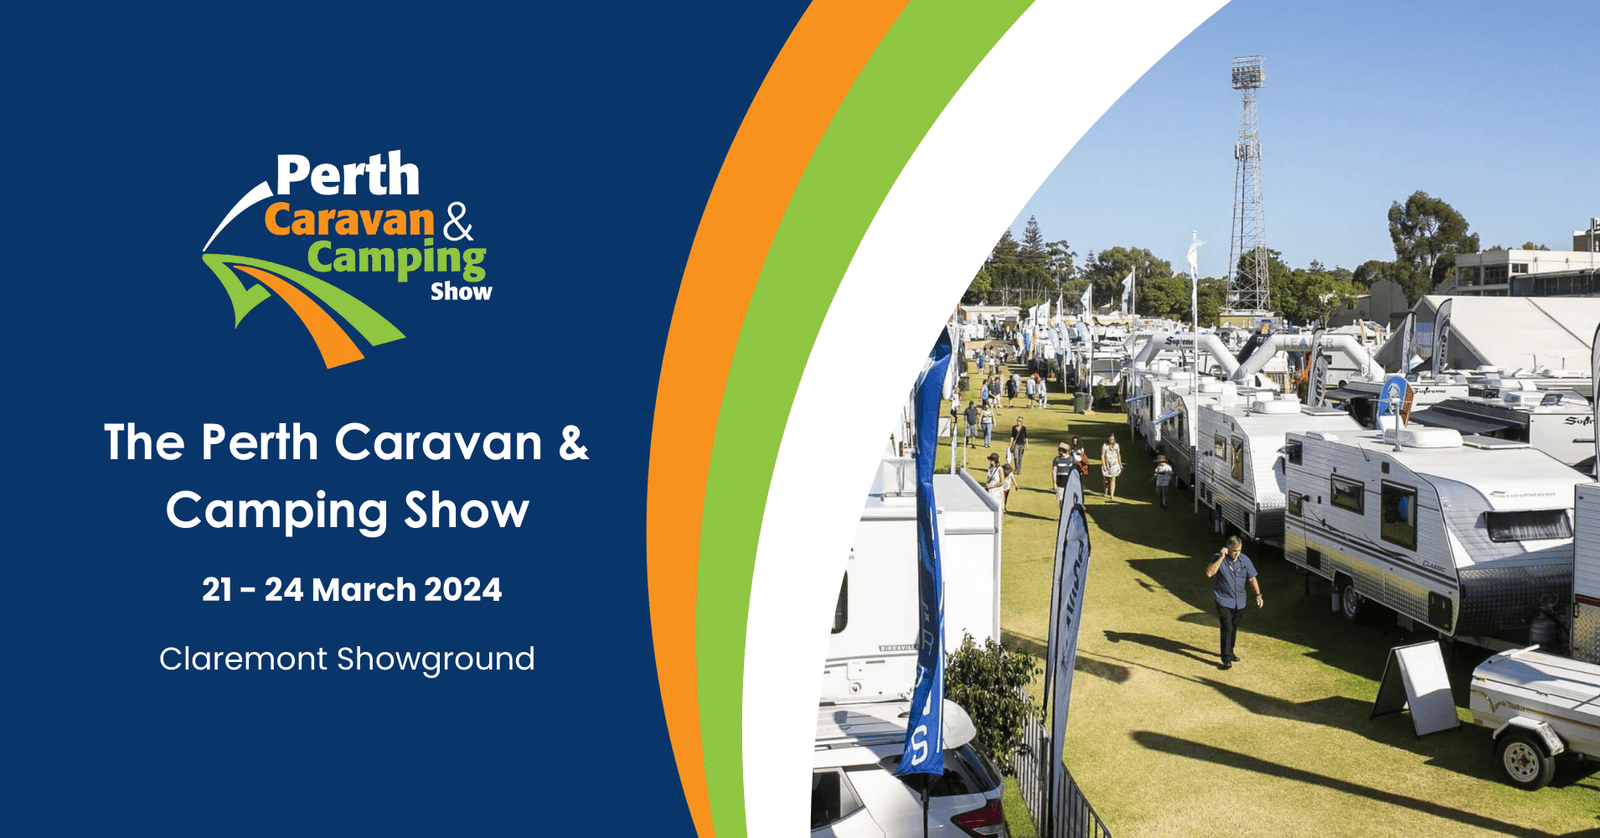 The Perth Caravan & Camping Show 2024